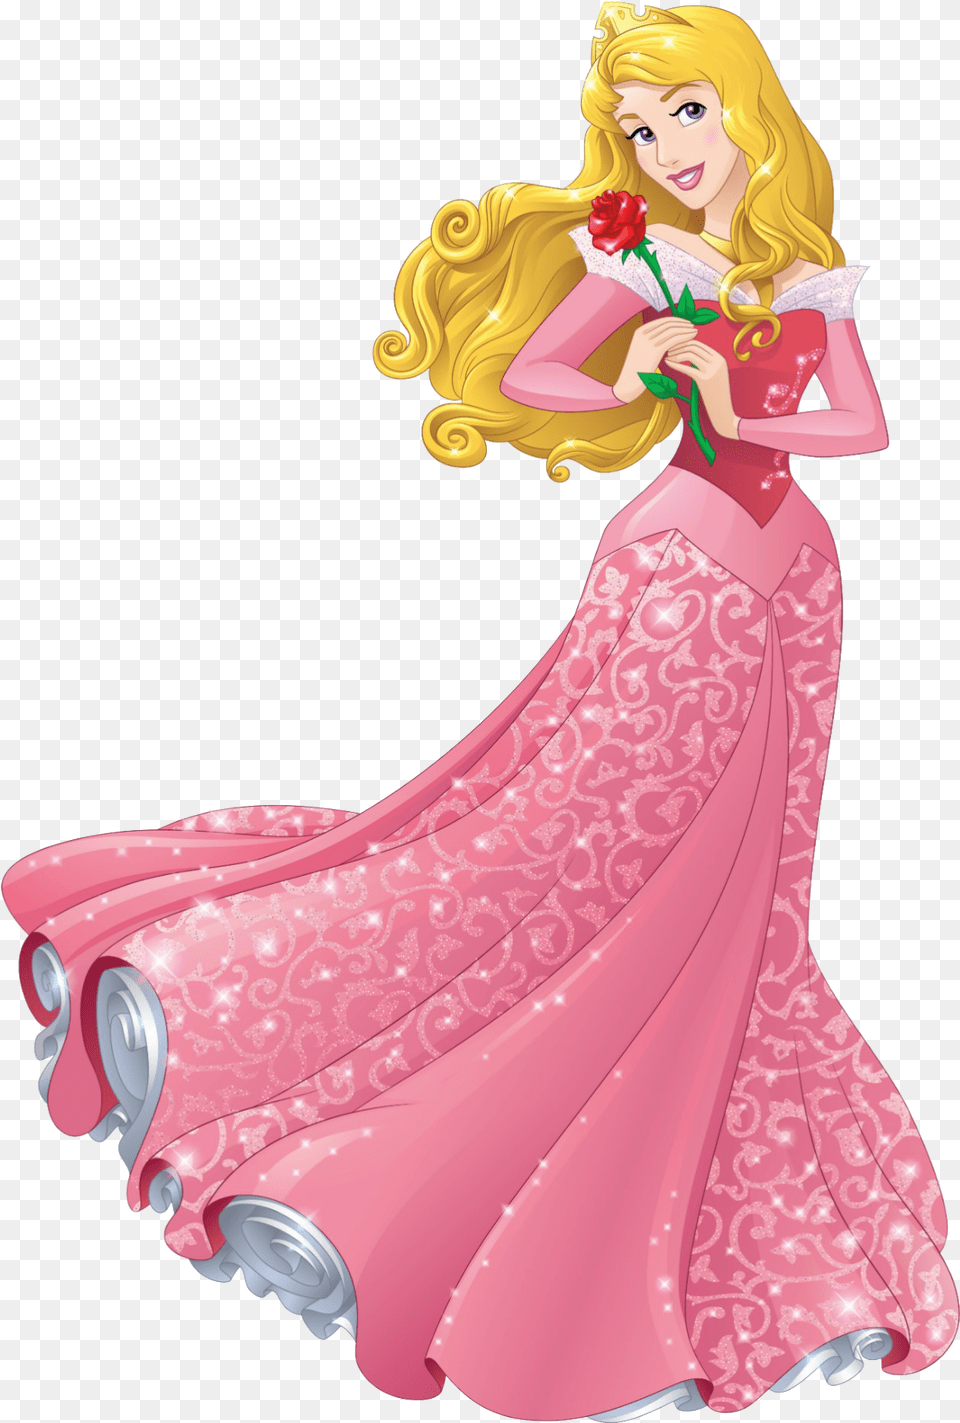 Princess Aurora Image For Designing Projects Disney Princess Aurora, Clothing, Dress, Figurine, Formal Wear Png